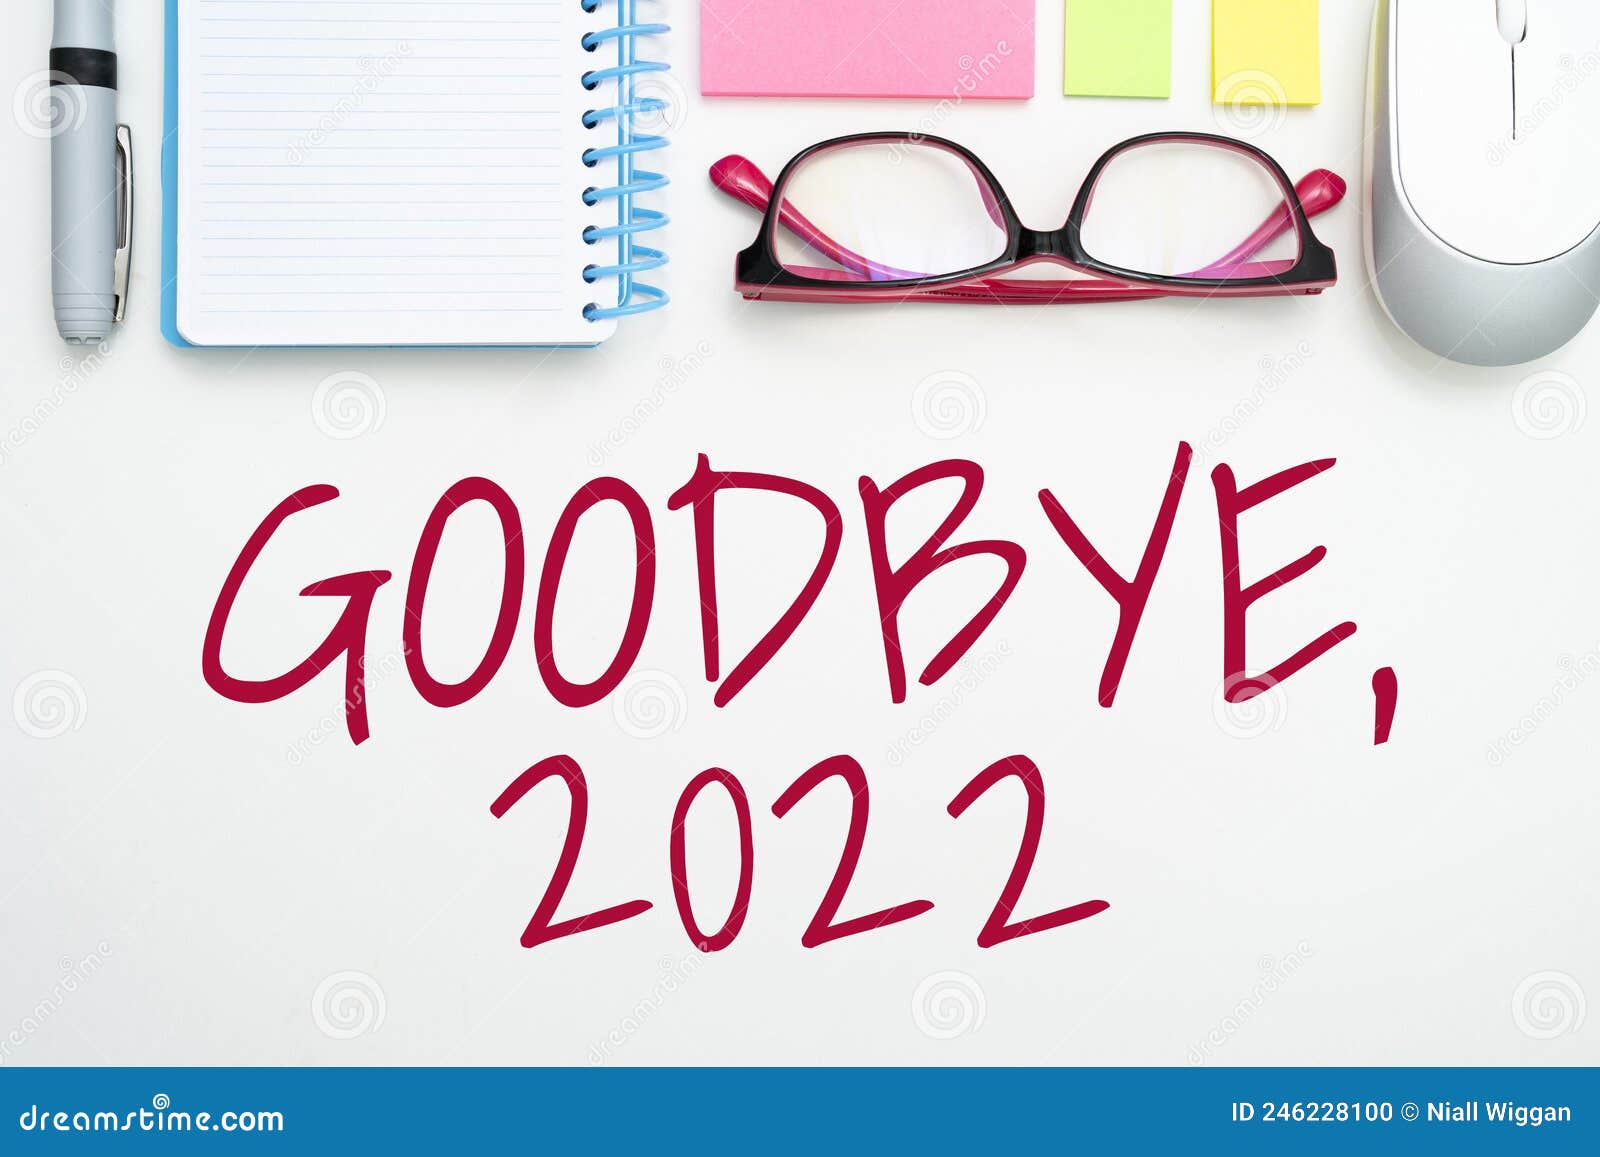 hand writing sign goodbye 2022. internet concept new year eve milestone last month celebration transition flashy school